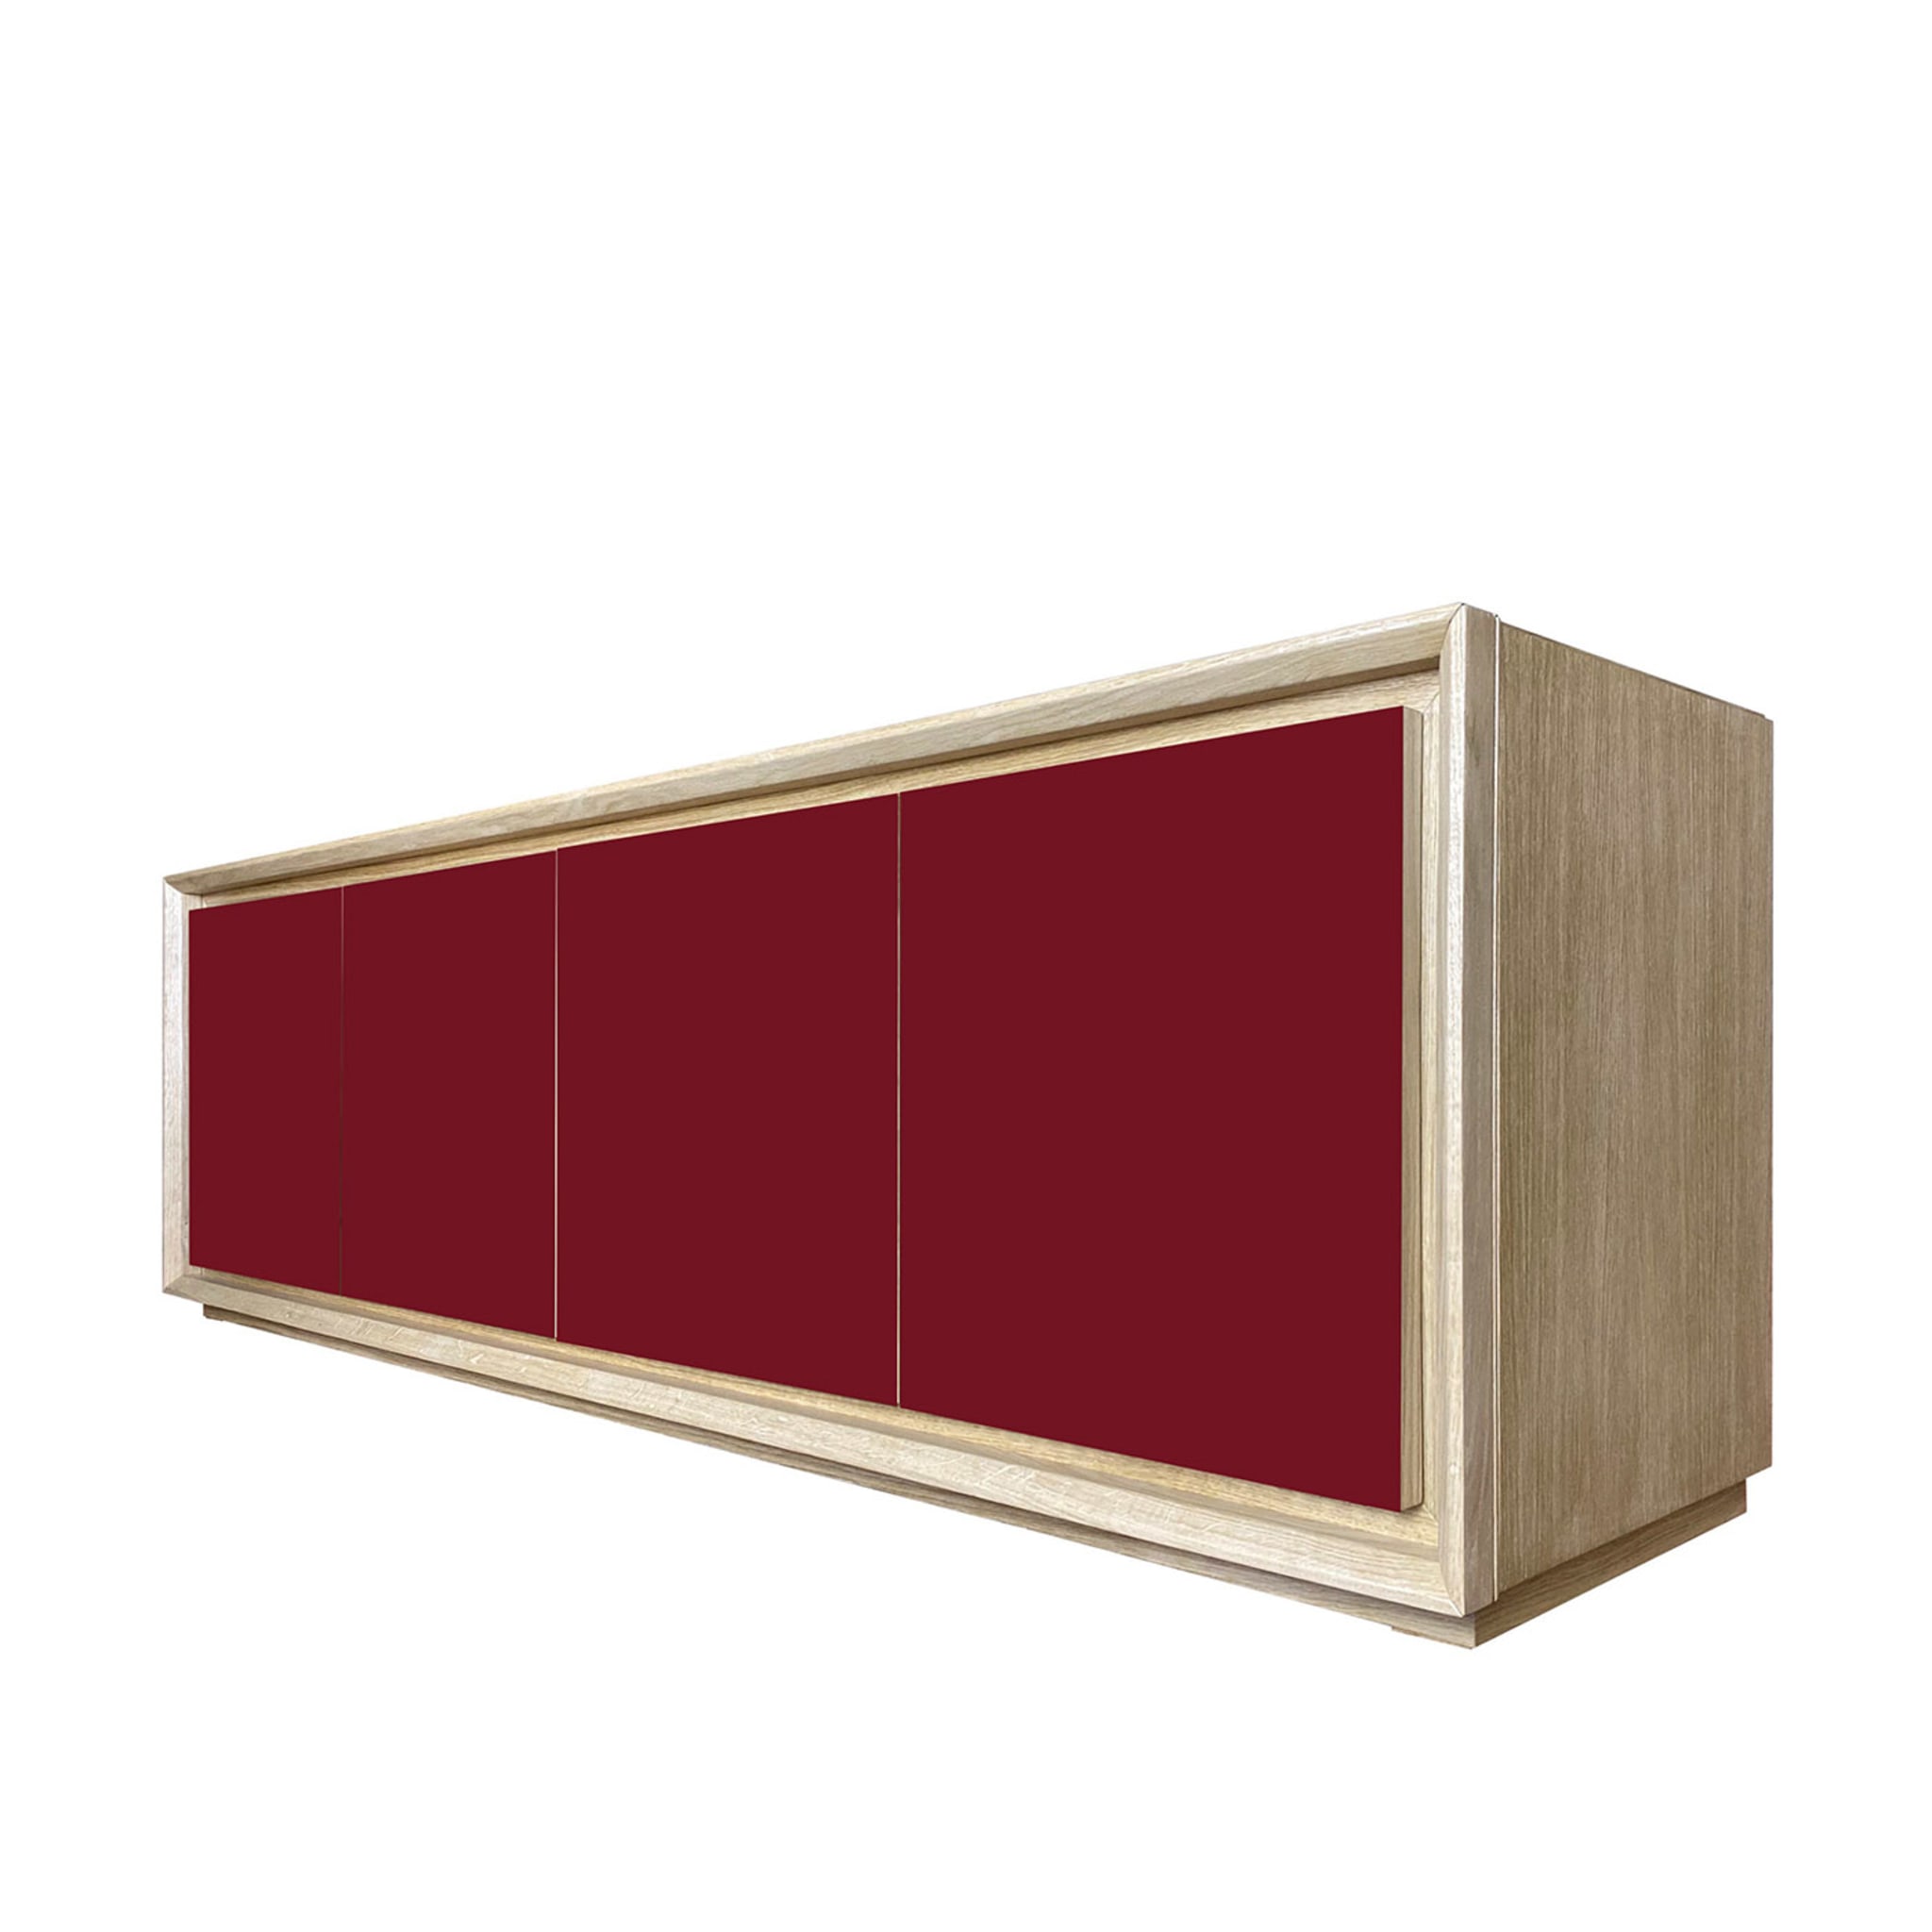 Rubino 3-türiges rubinrotes Sideboard von Mascia Meccani - Alternative Ansicht 3